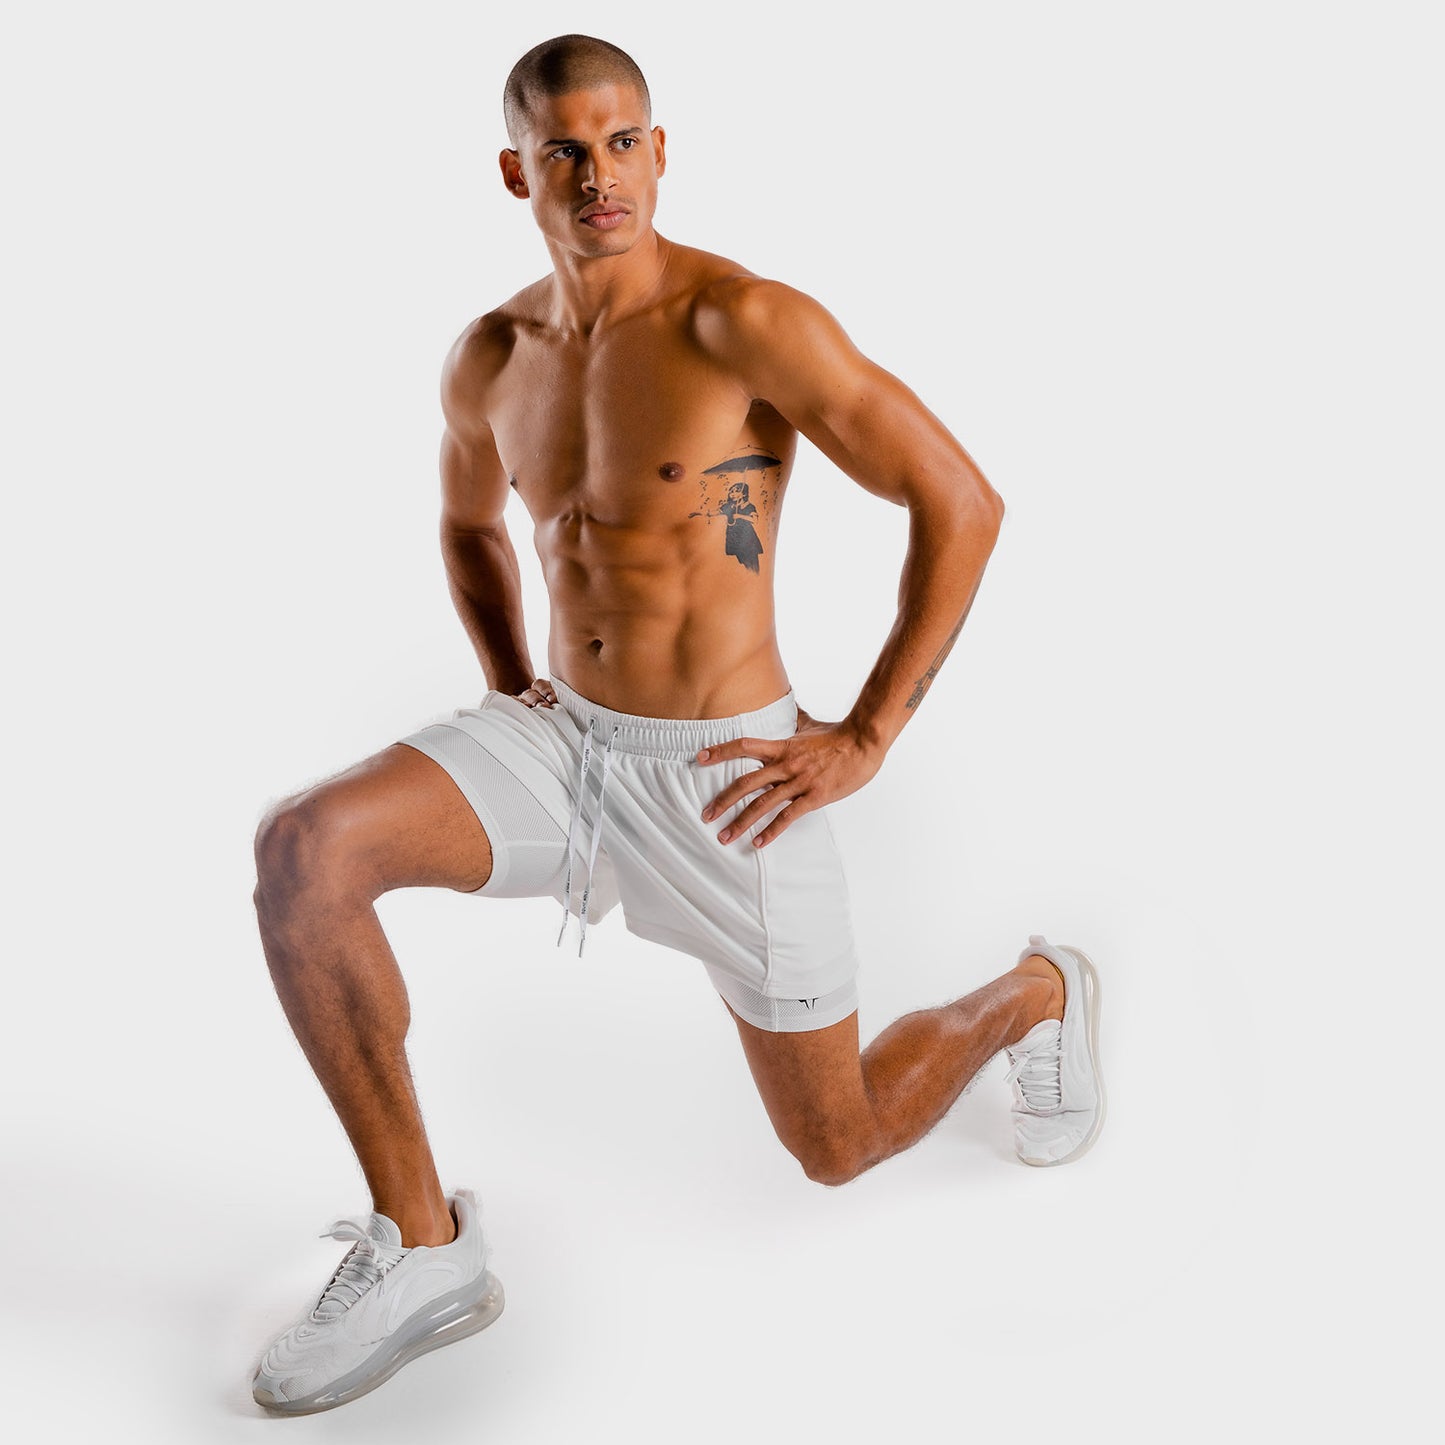 squatwolf-workout-short-for-men-hybrid-2-in-1-shorts-white-gym-wear